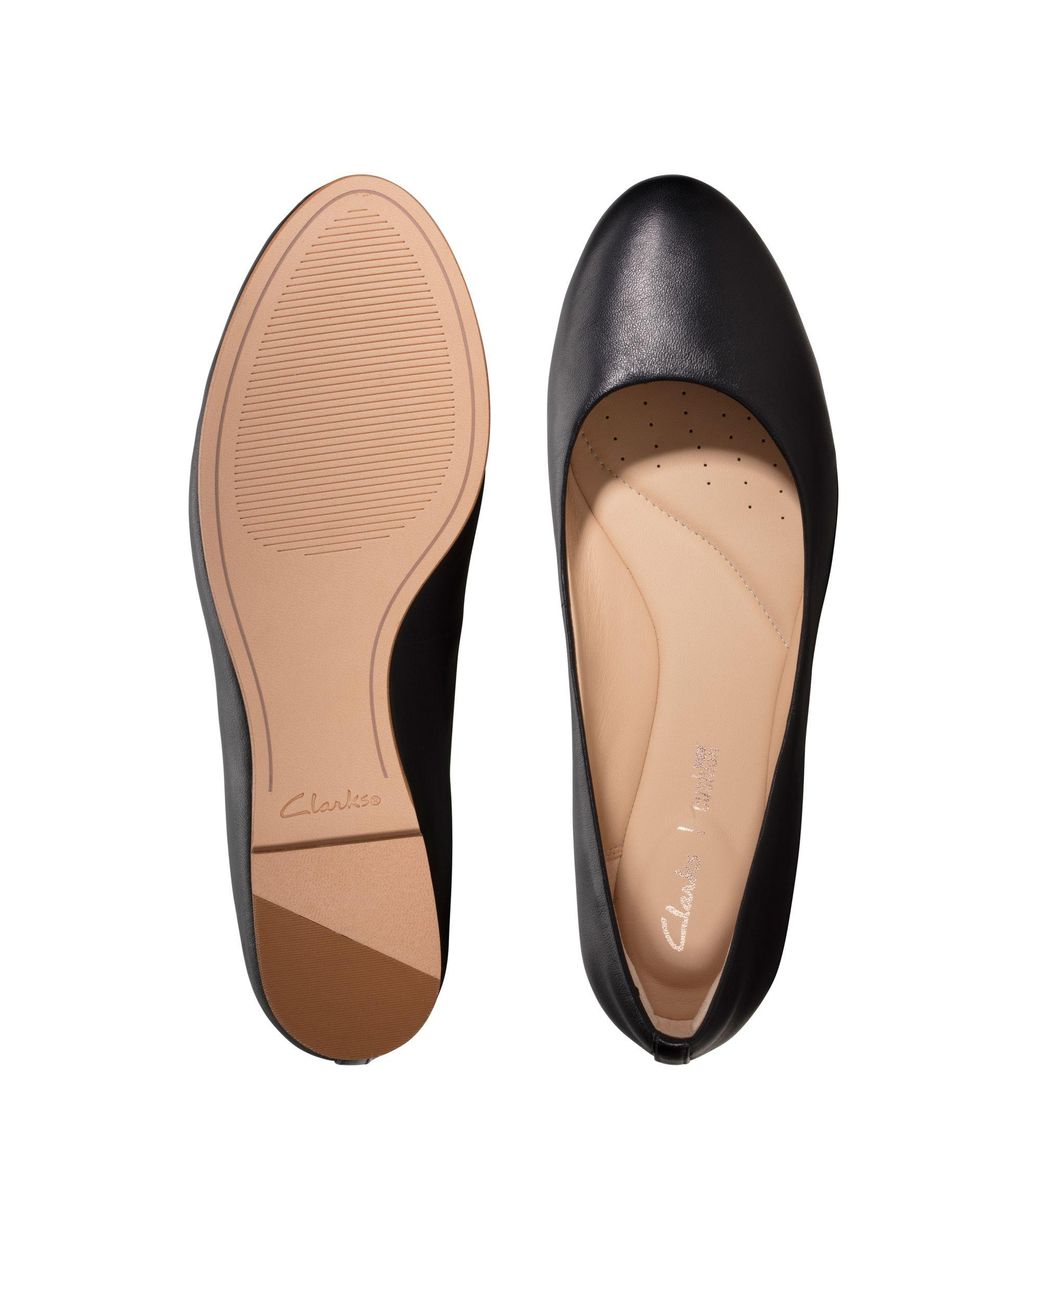 Clarks Grace Piper Shoes Dubai, SAVE 40% - lutheranems.com